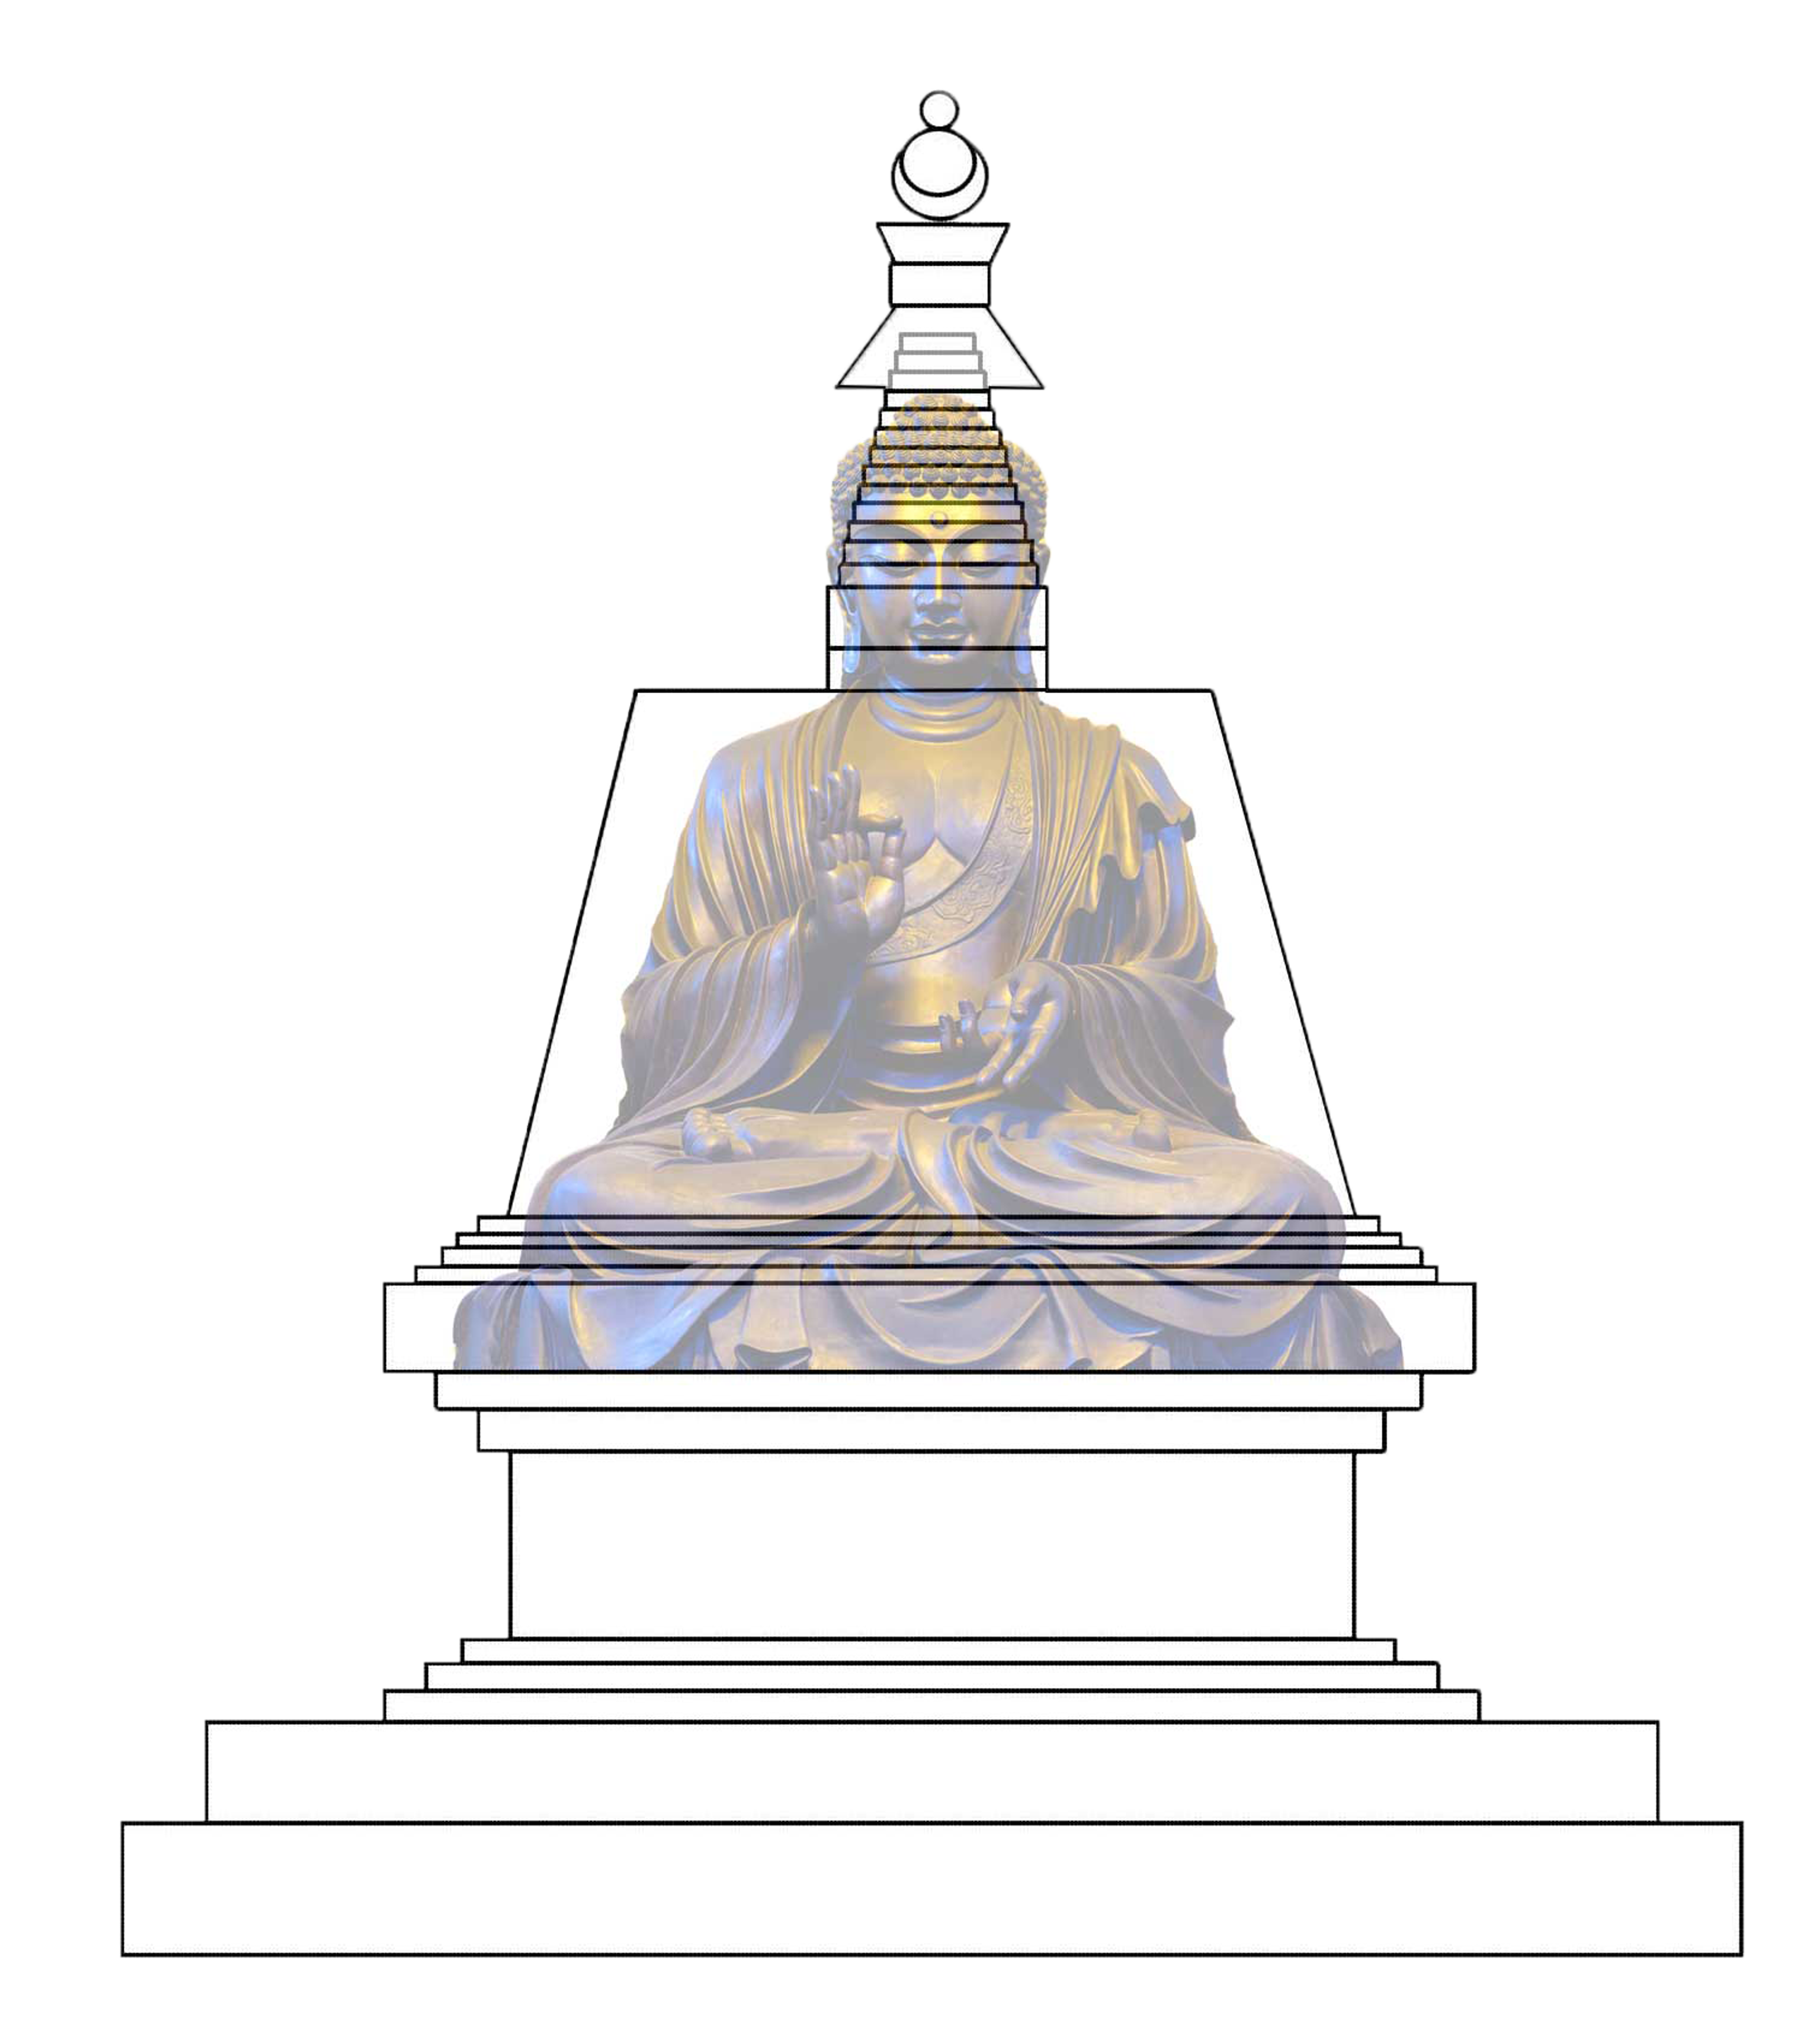 The Purkhang represents the sitting Buddha, Karme Choling Meditation Retreat Center, Vermont